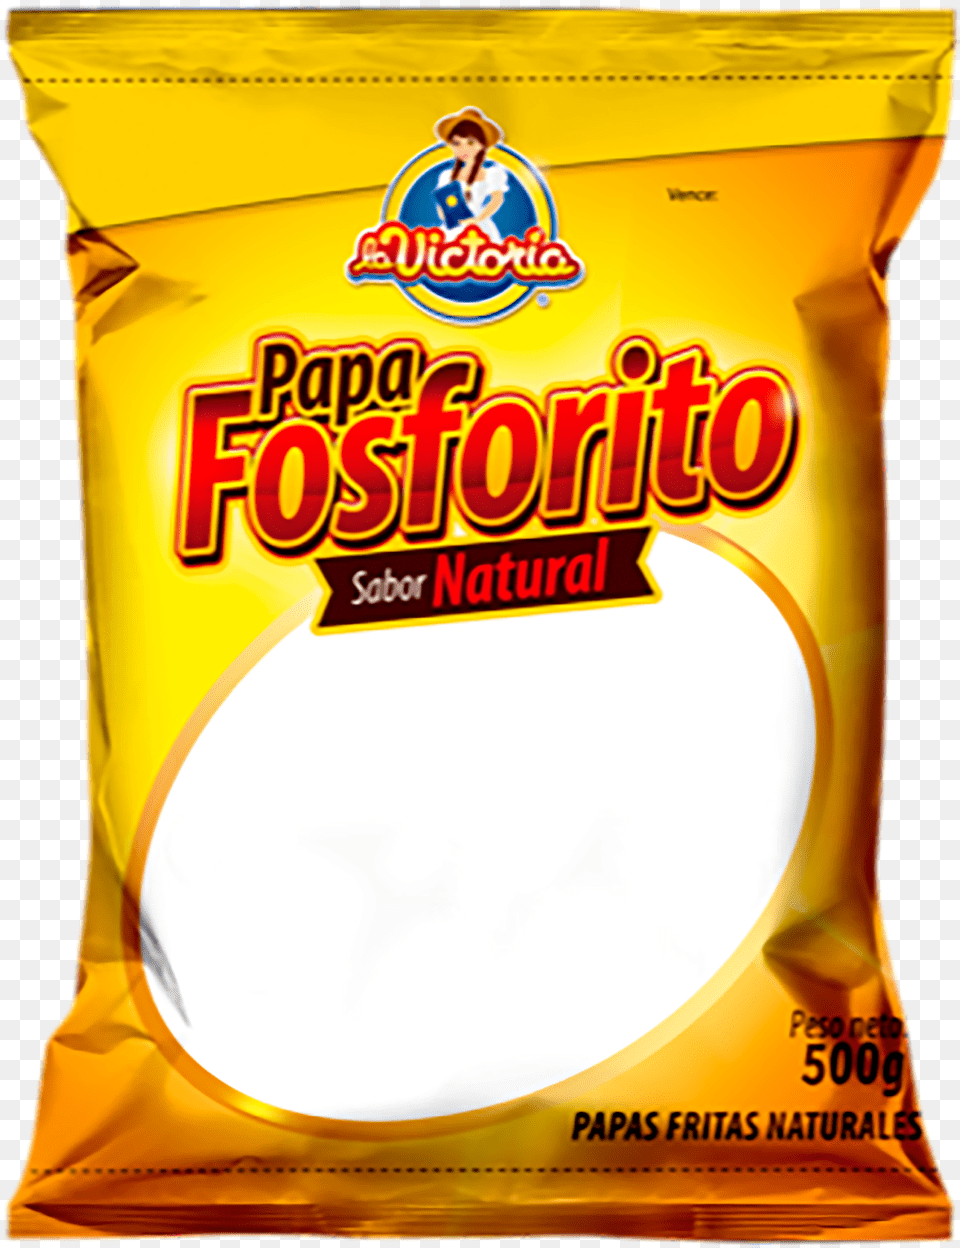 Papa Fosforito 500g Whole Grain, Powder, Flour, Food, Person Png Image